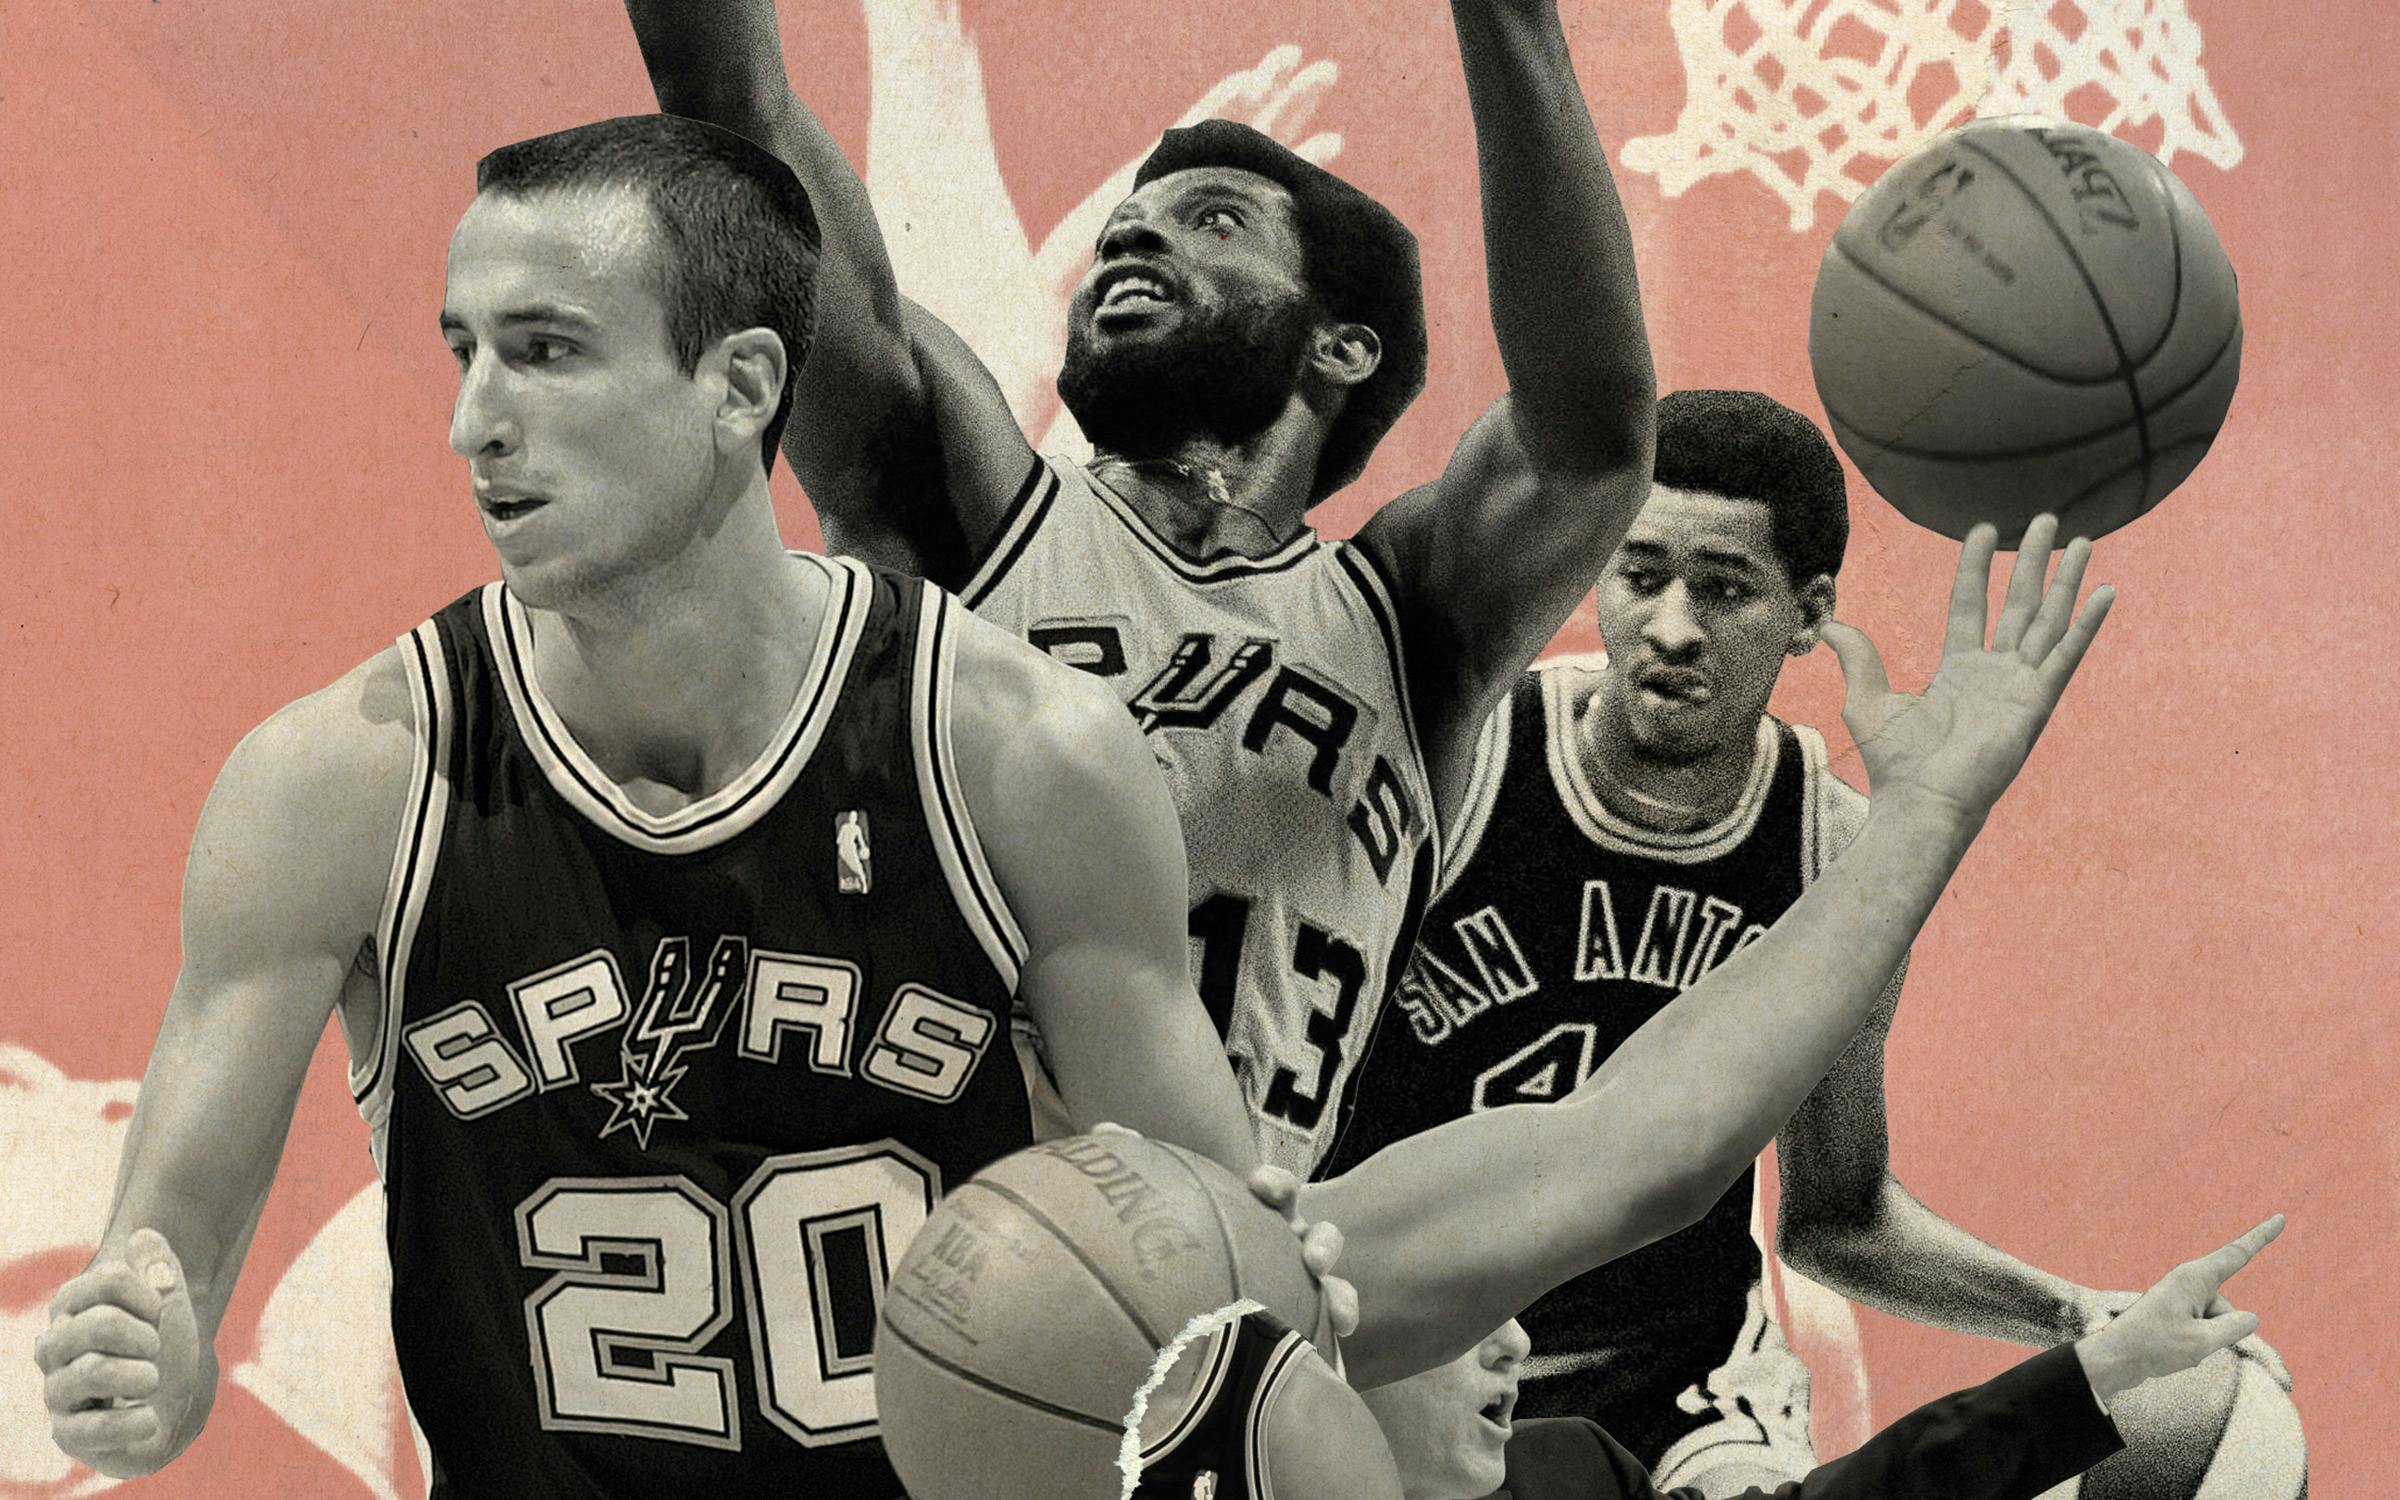 San Antonio Spurs: Remembering the 1999 NBA championship run